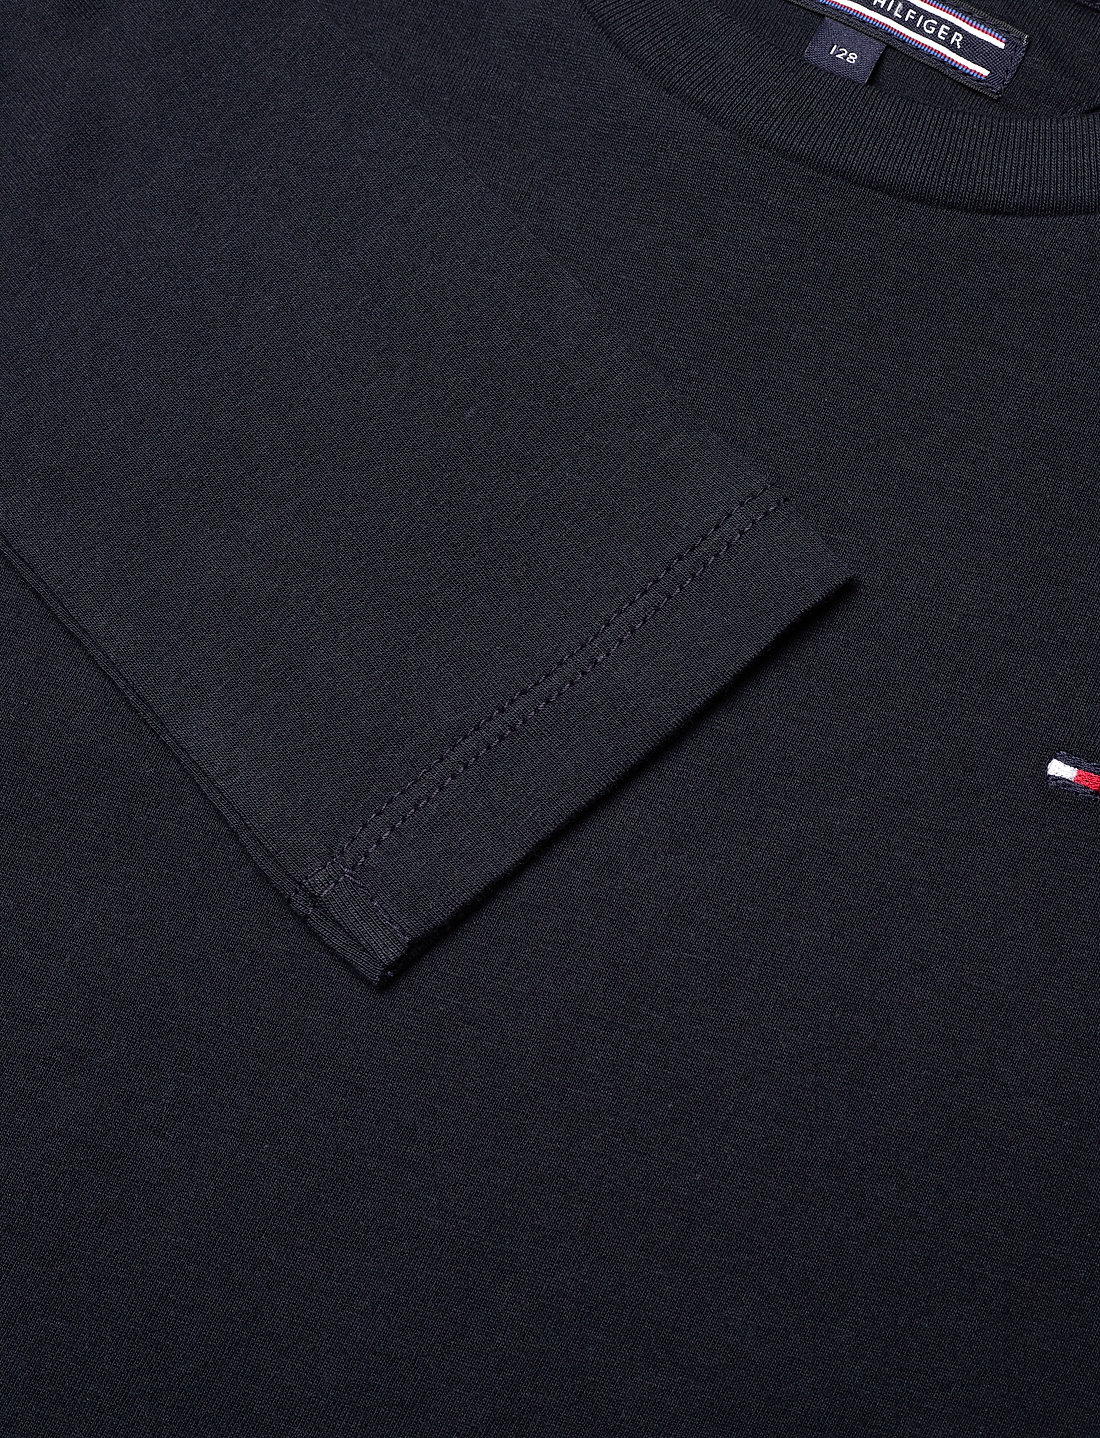 Tommy Hilfiger Boys Basic Cn Knit L/s - Long-sleeved t-shirts